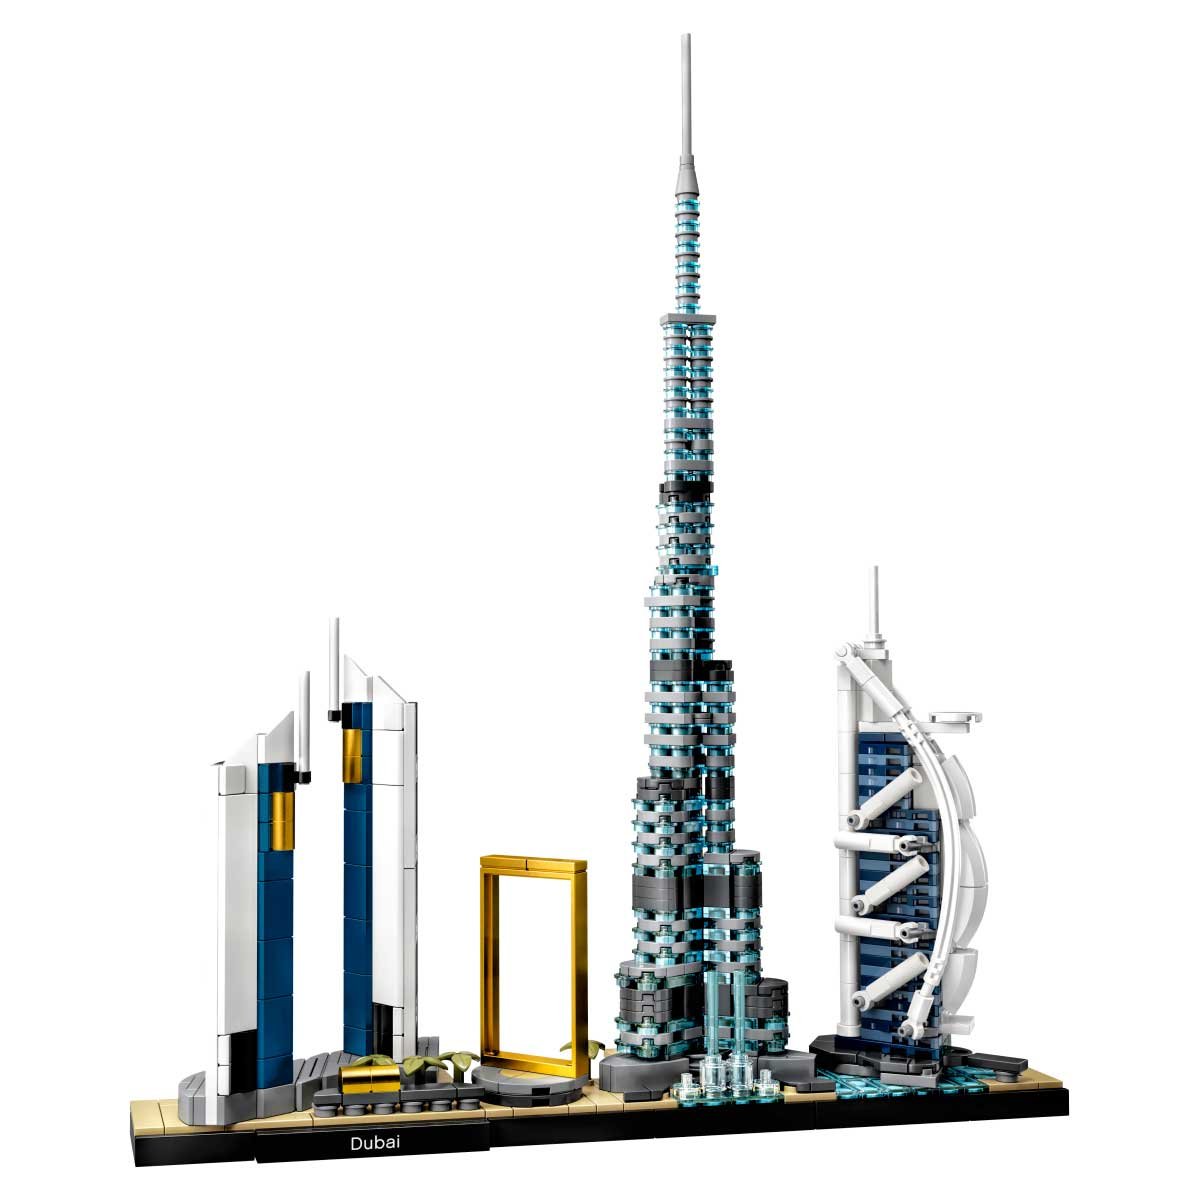 Dubai Lego Architecture